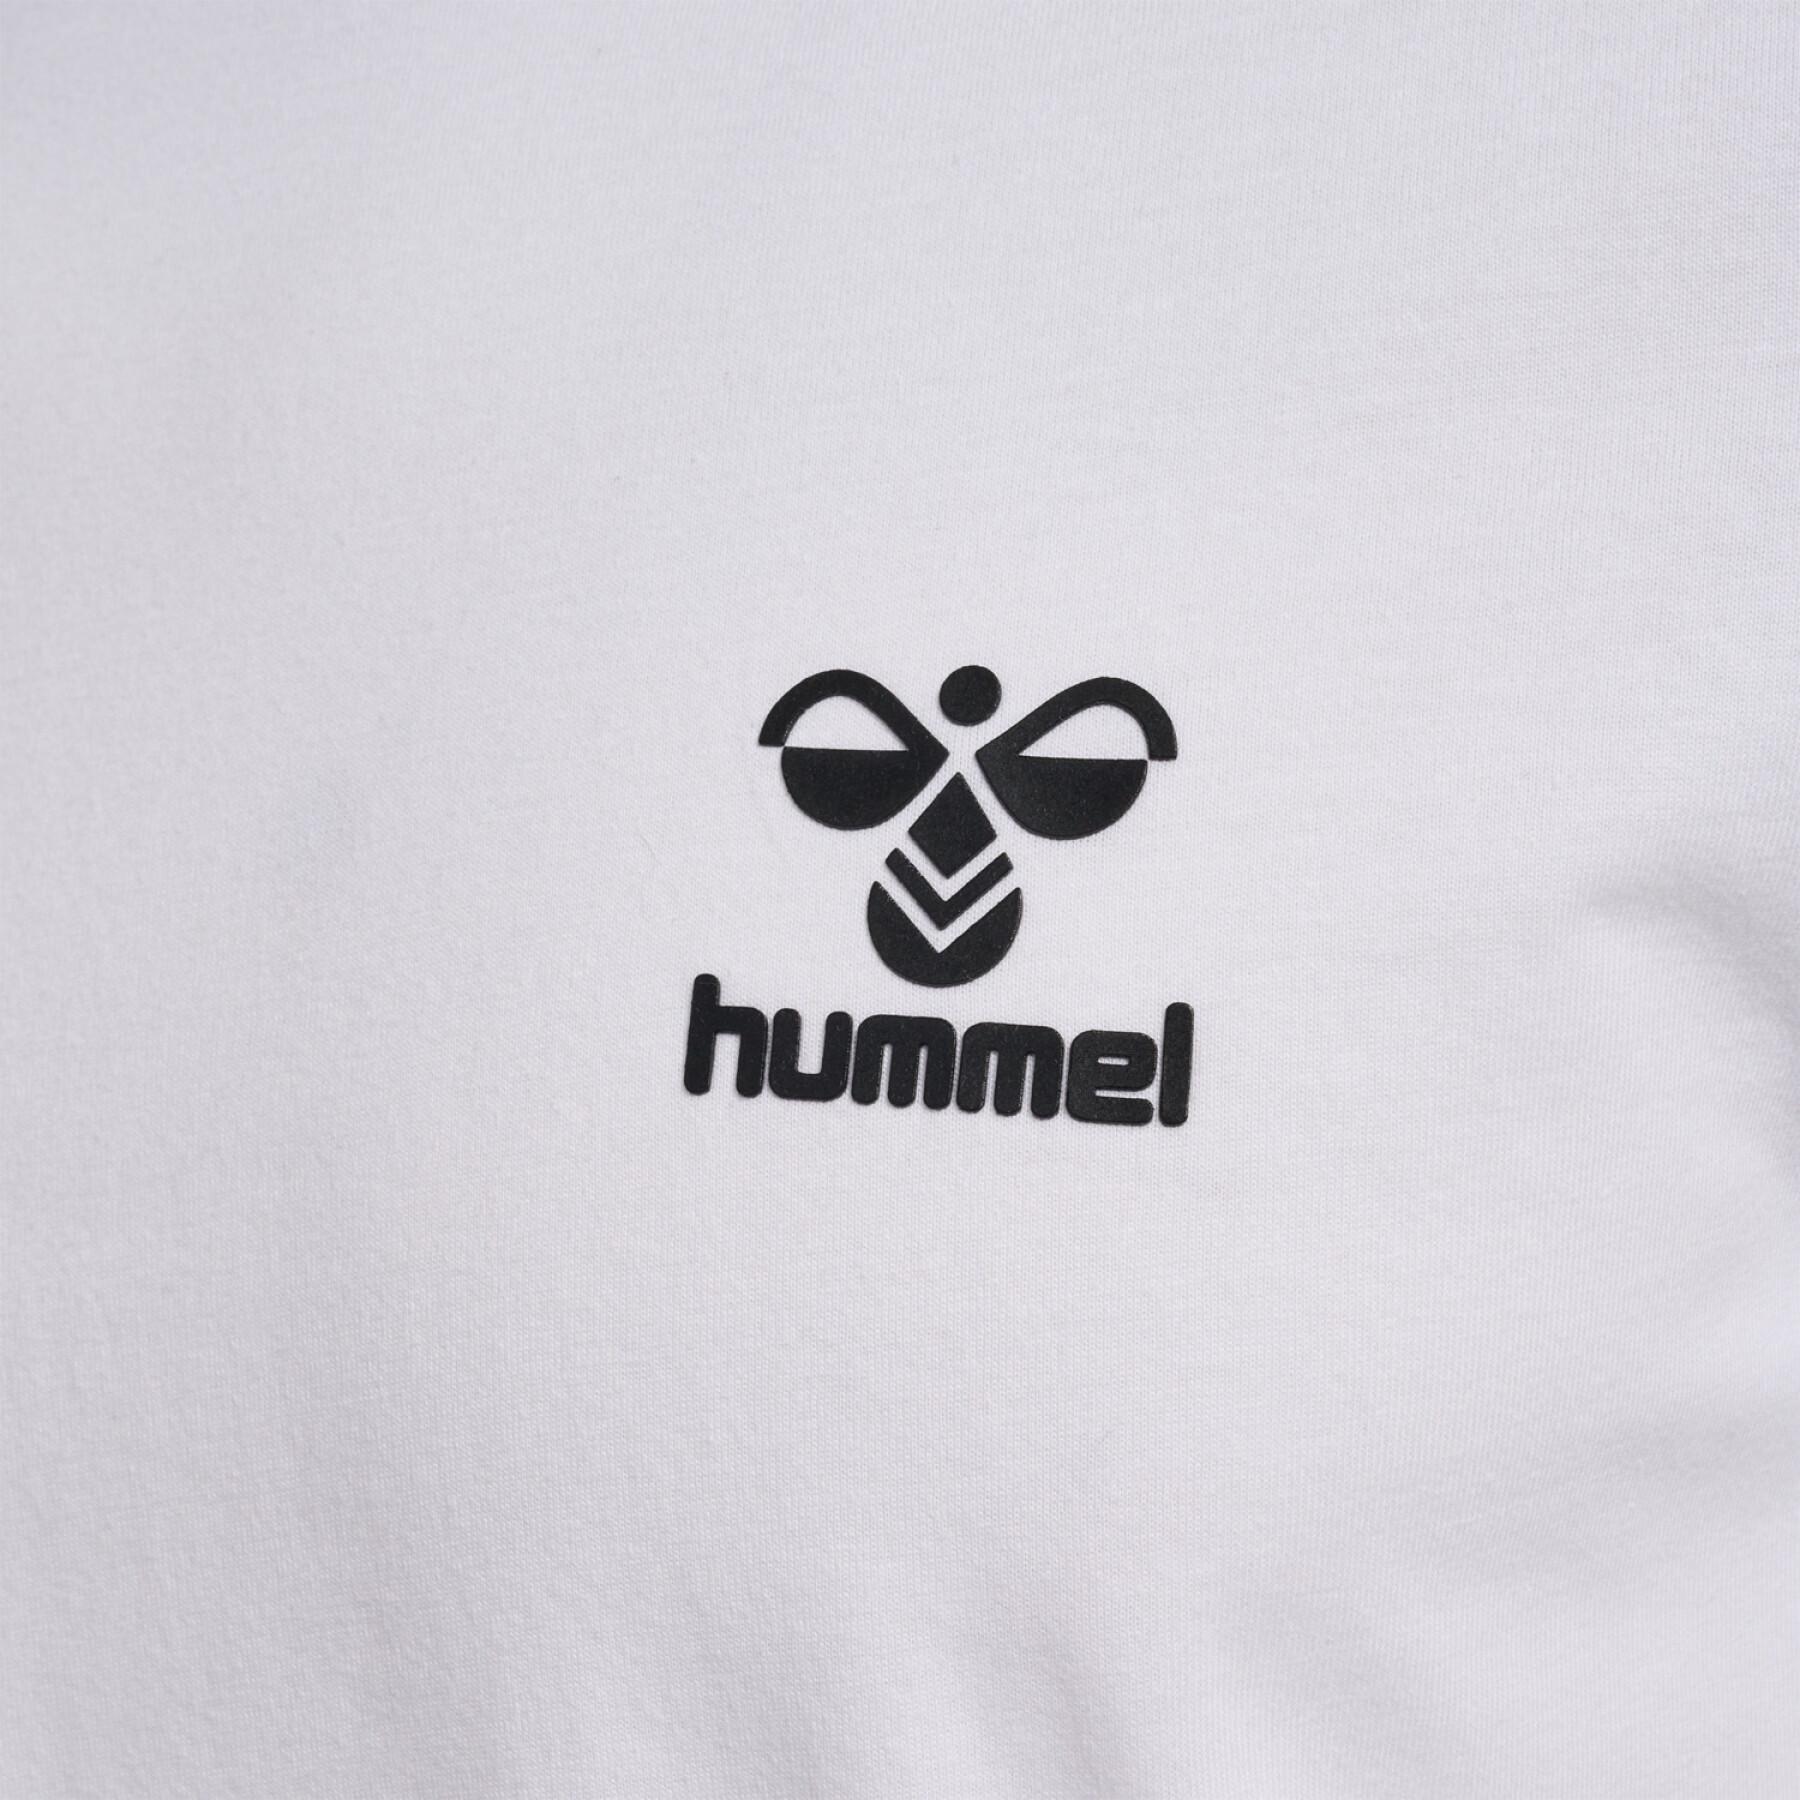 T-shirt Hummel Icons - - Hummel - Lifestyle Brands